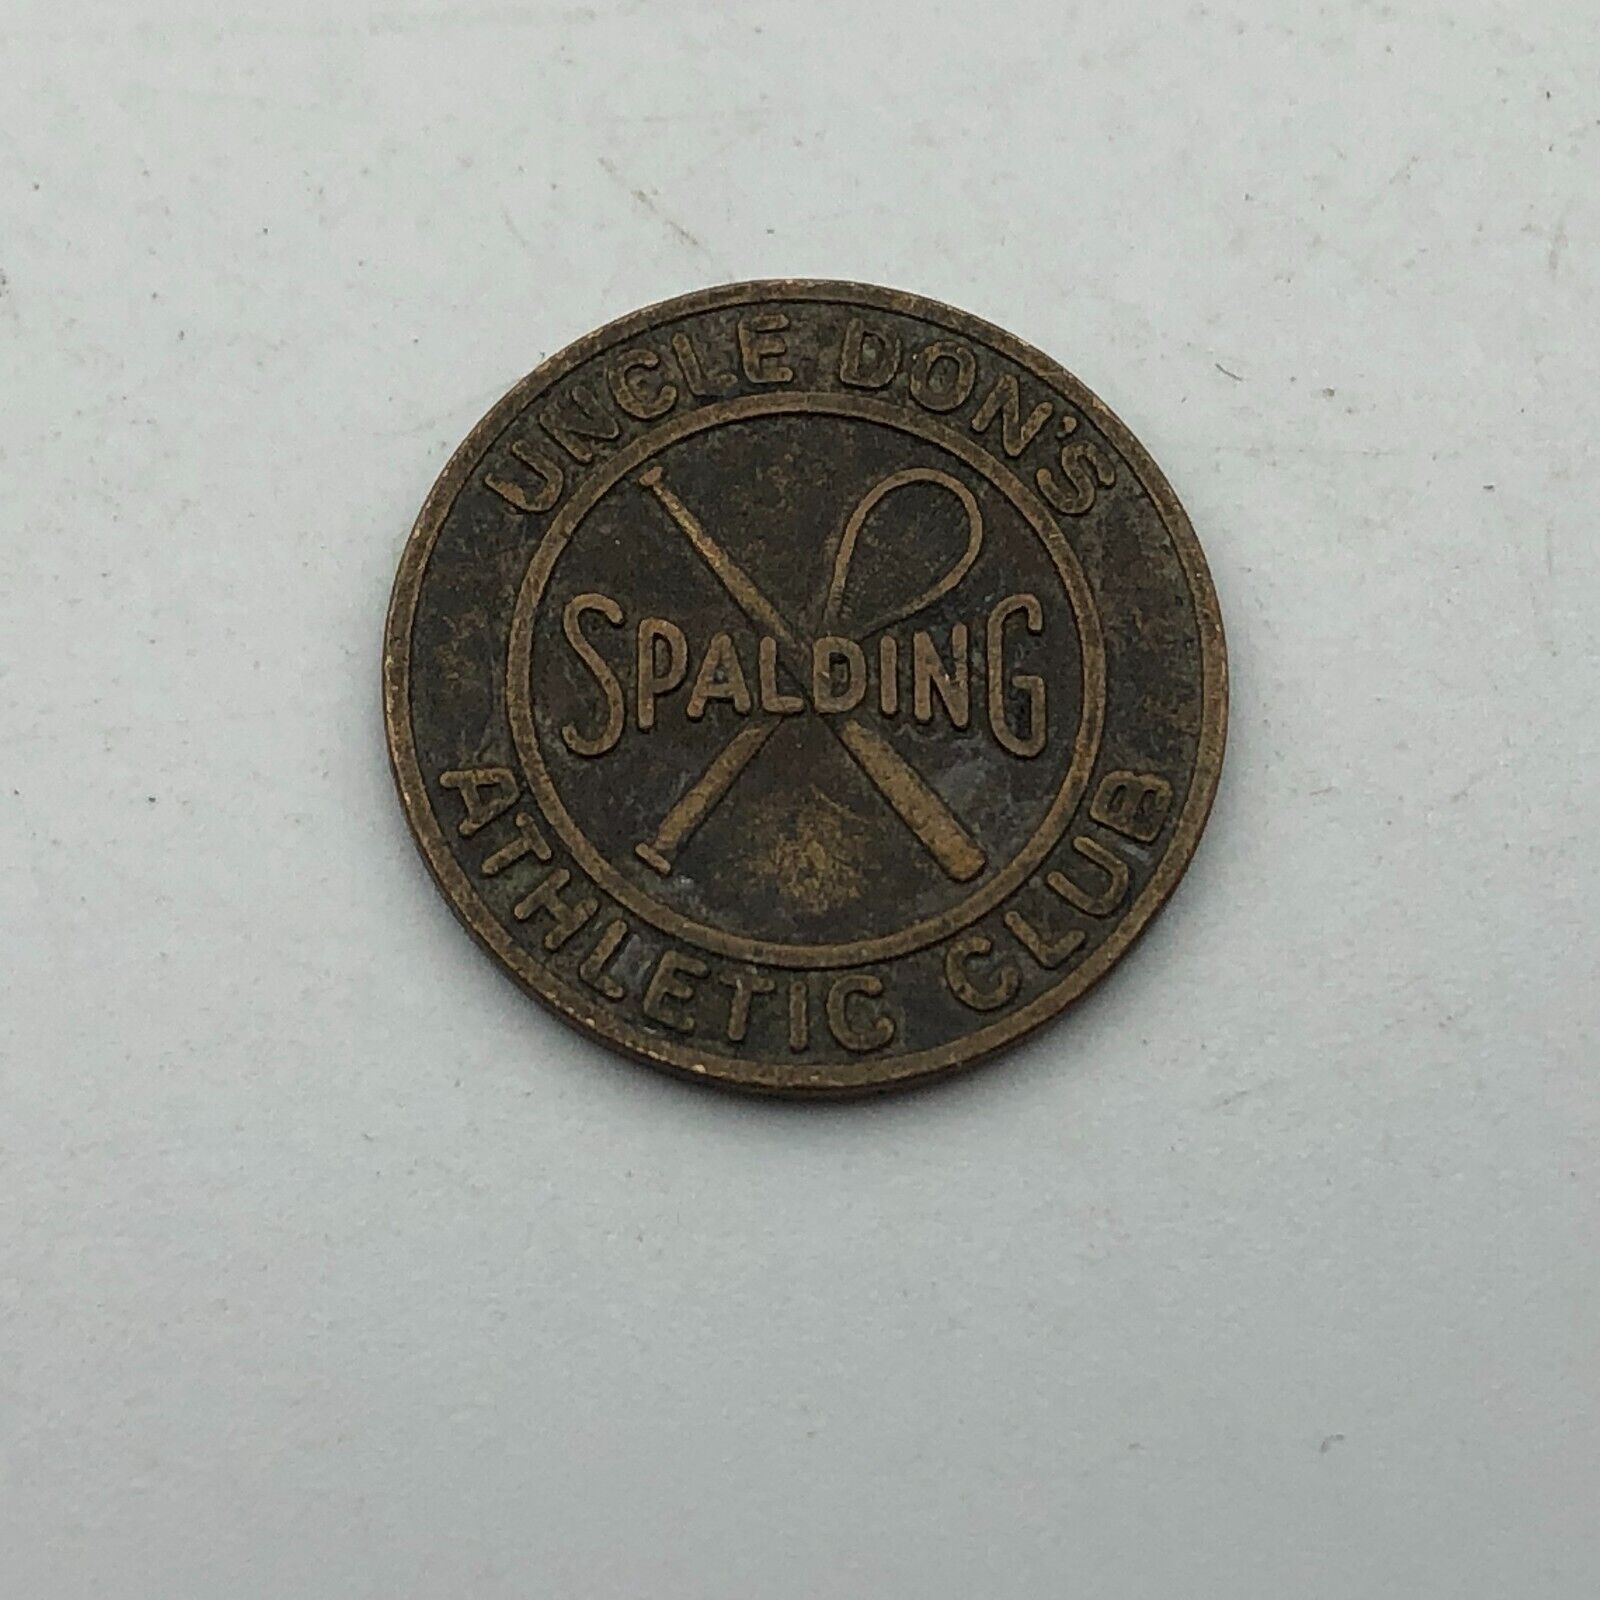 Spalding Uncle Dons Athletic Club Broken Pin? Medallion Bastian Vintage Antique